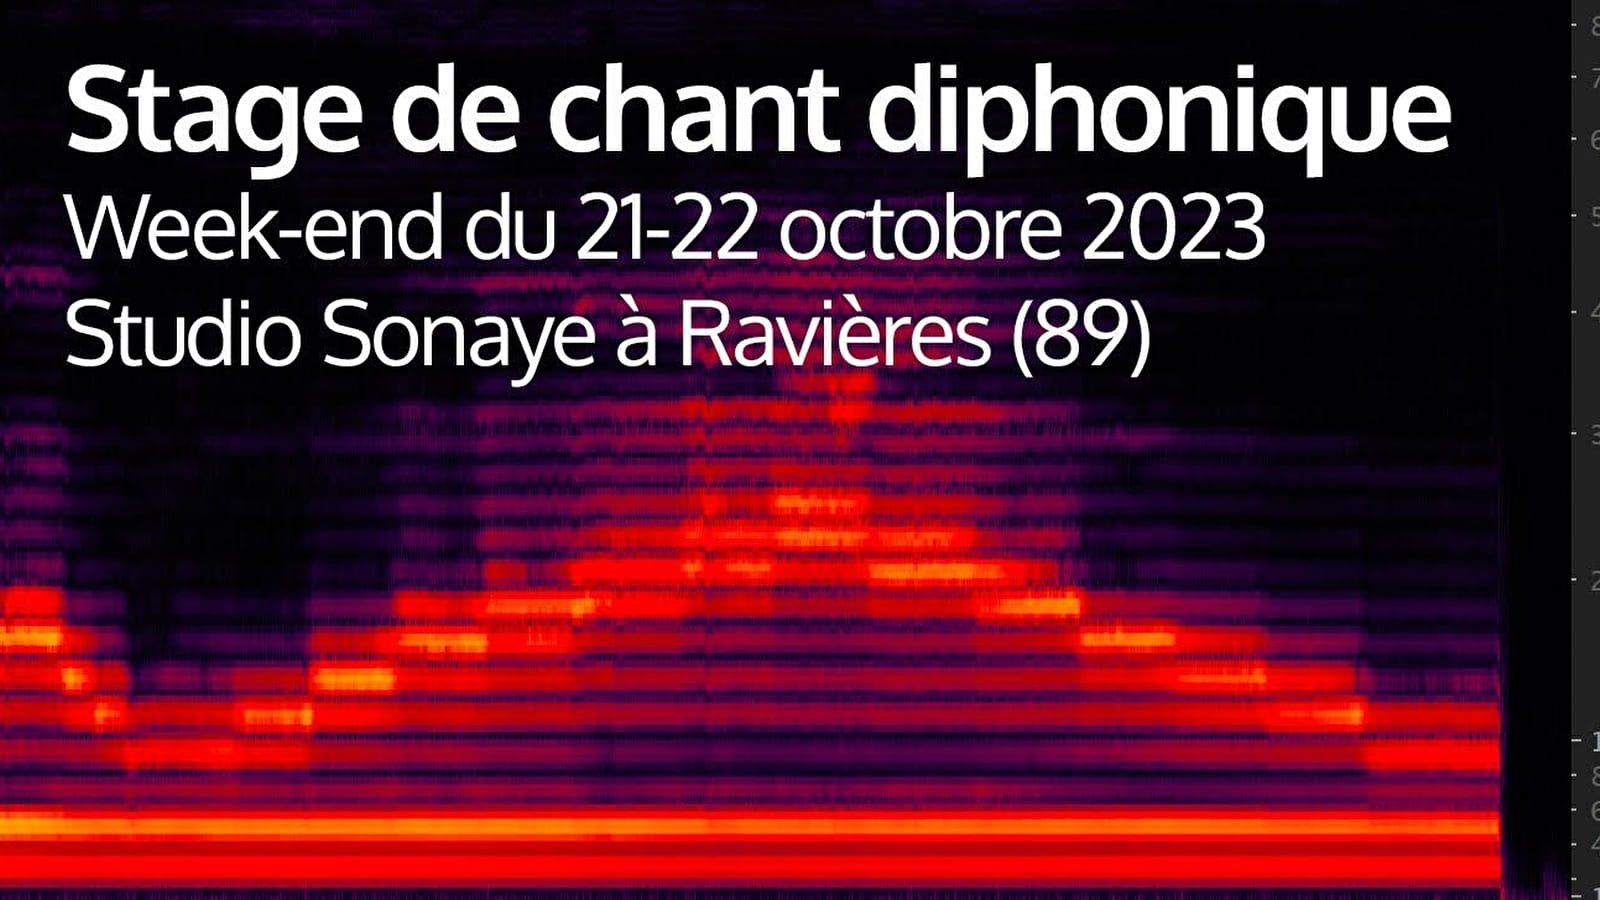 Diphonic singing course - Ravières